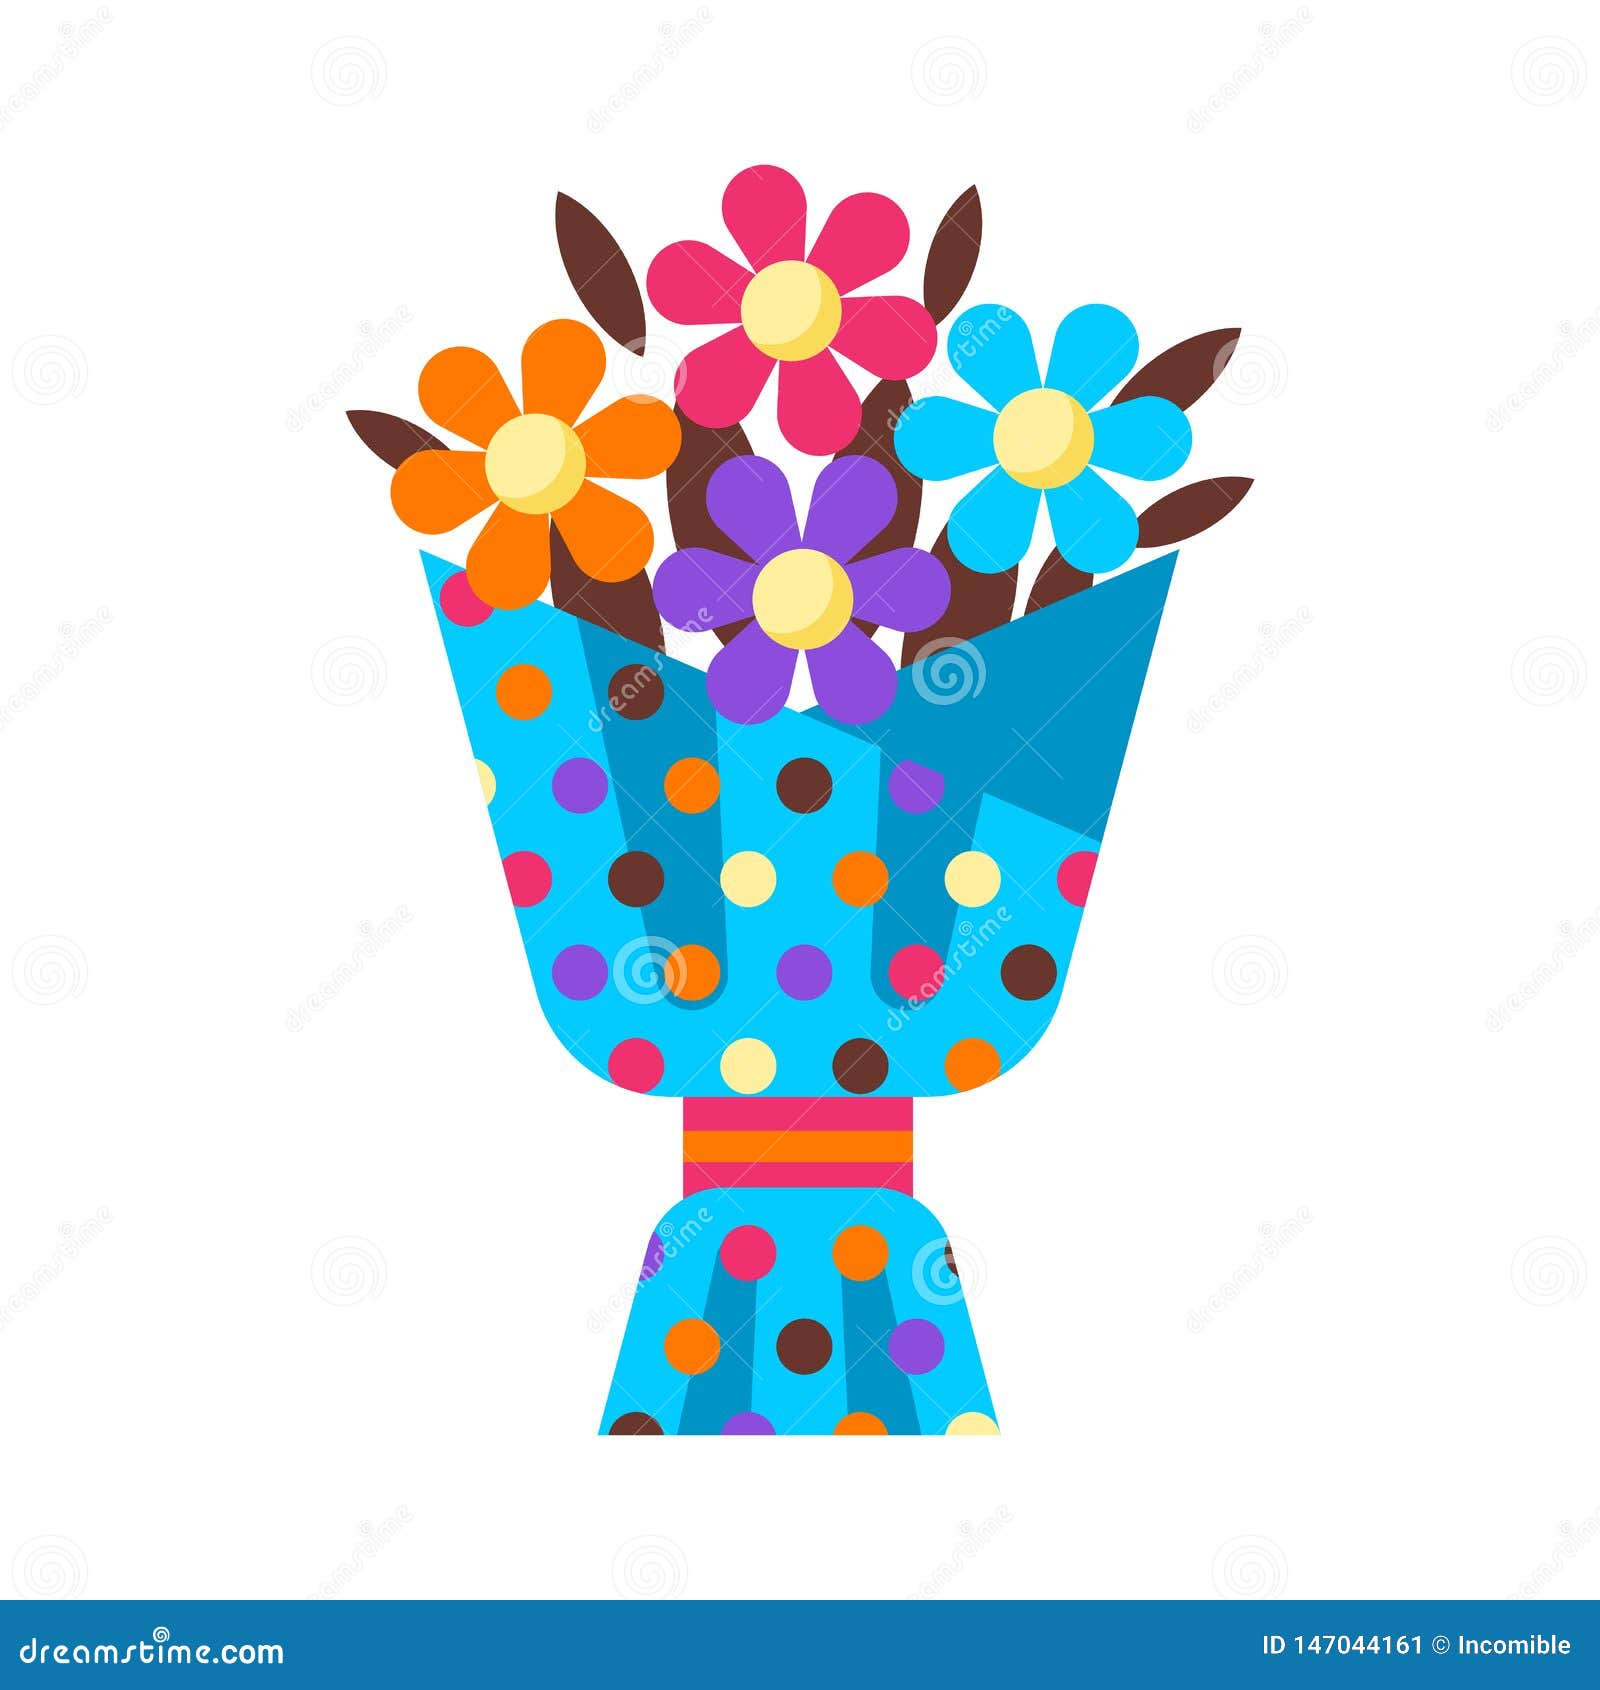 https://thumbs.dreamstime.com/z/happy-birthday-flower-bouquet-gift-festive-icon-illustration-147044161.jpg